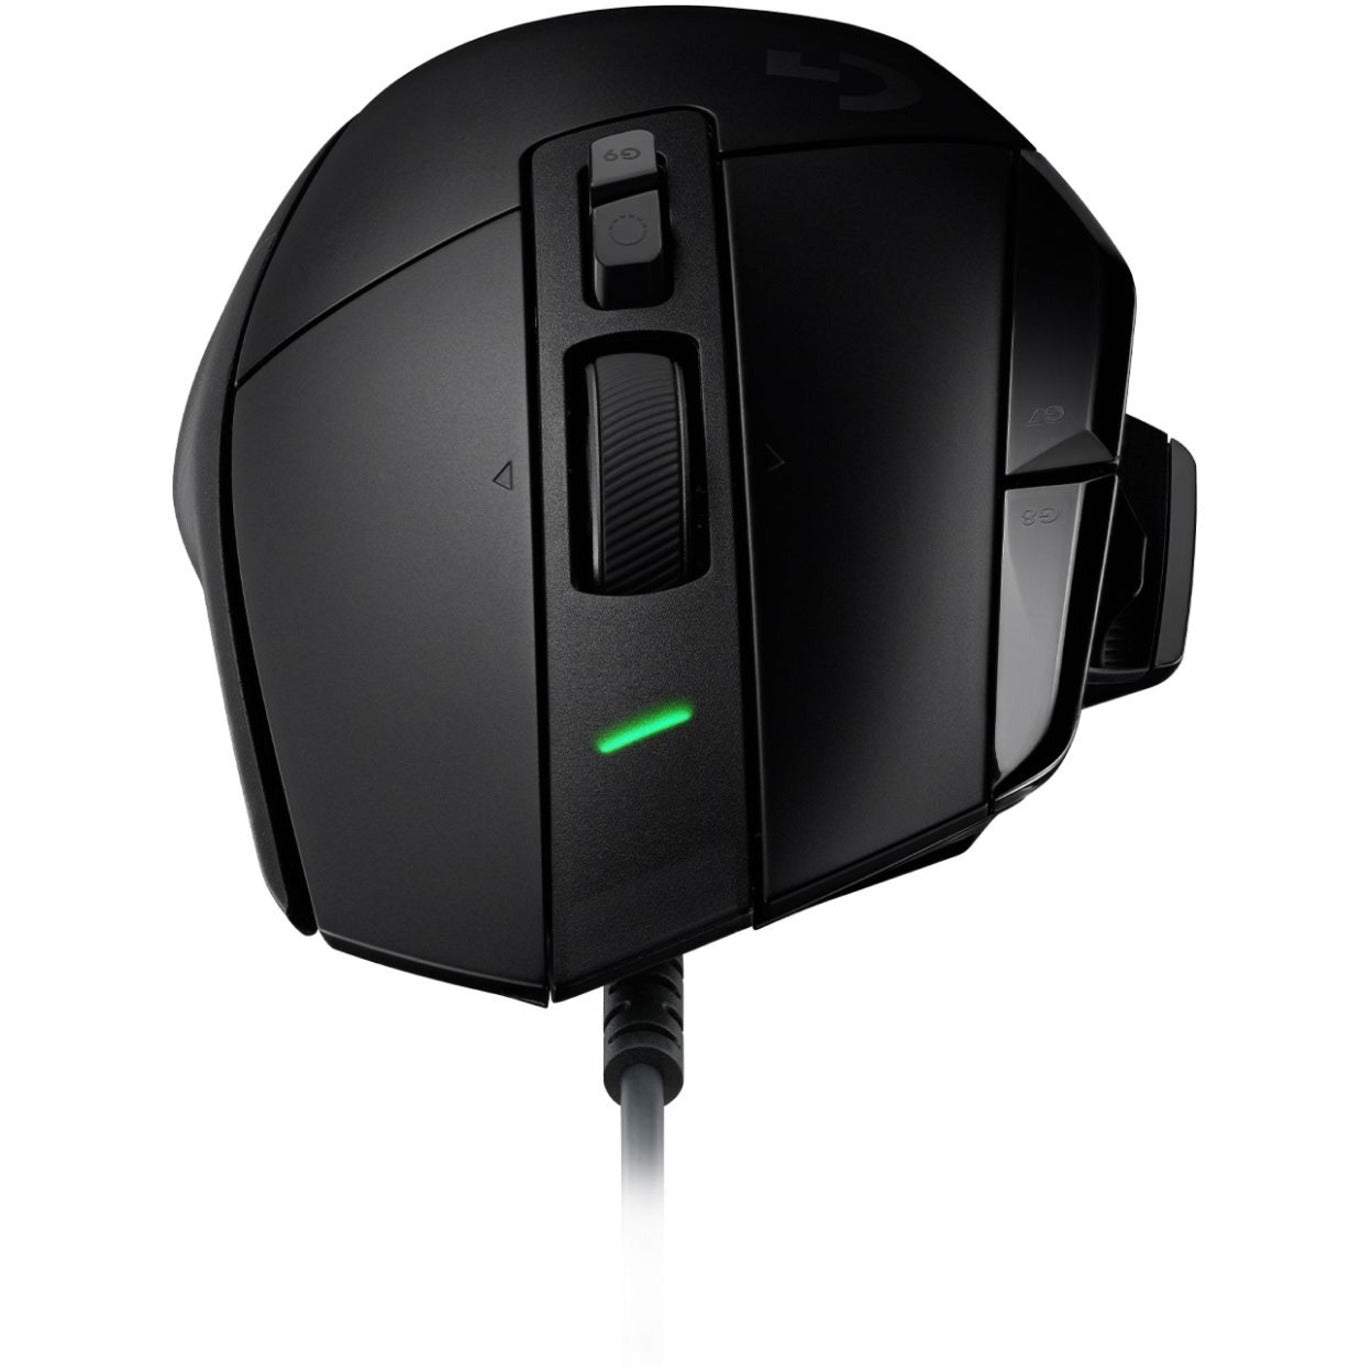 Logitech G 910-006136 G502 X Gaming Mouse, High Precision Optical Sensor, 25600 DPI, USB Wired, 2 Year Warranty